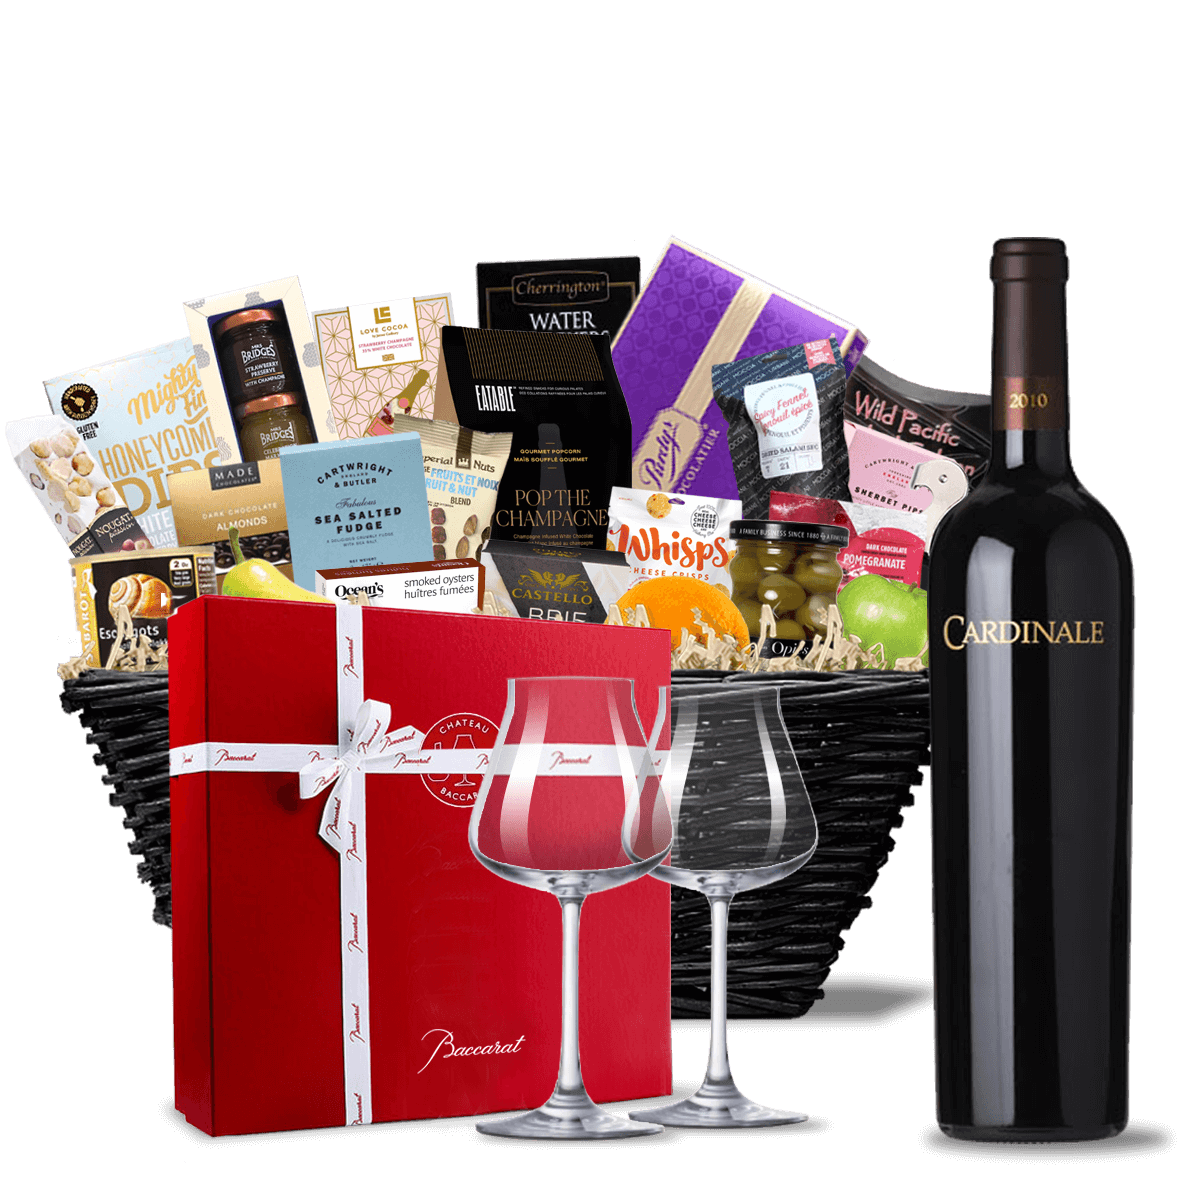 TAG Liquor Stores BC - Cardinale Cabernet Sauvignon Wine 2010 Ultra Luxe Gift Basket